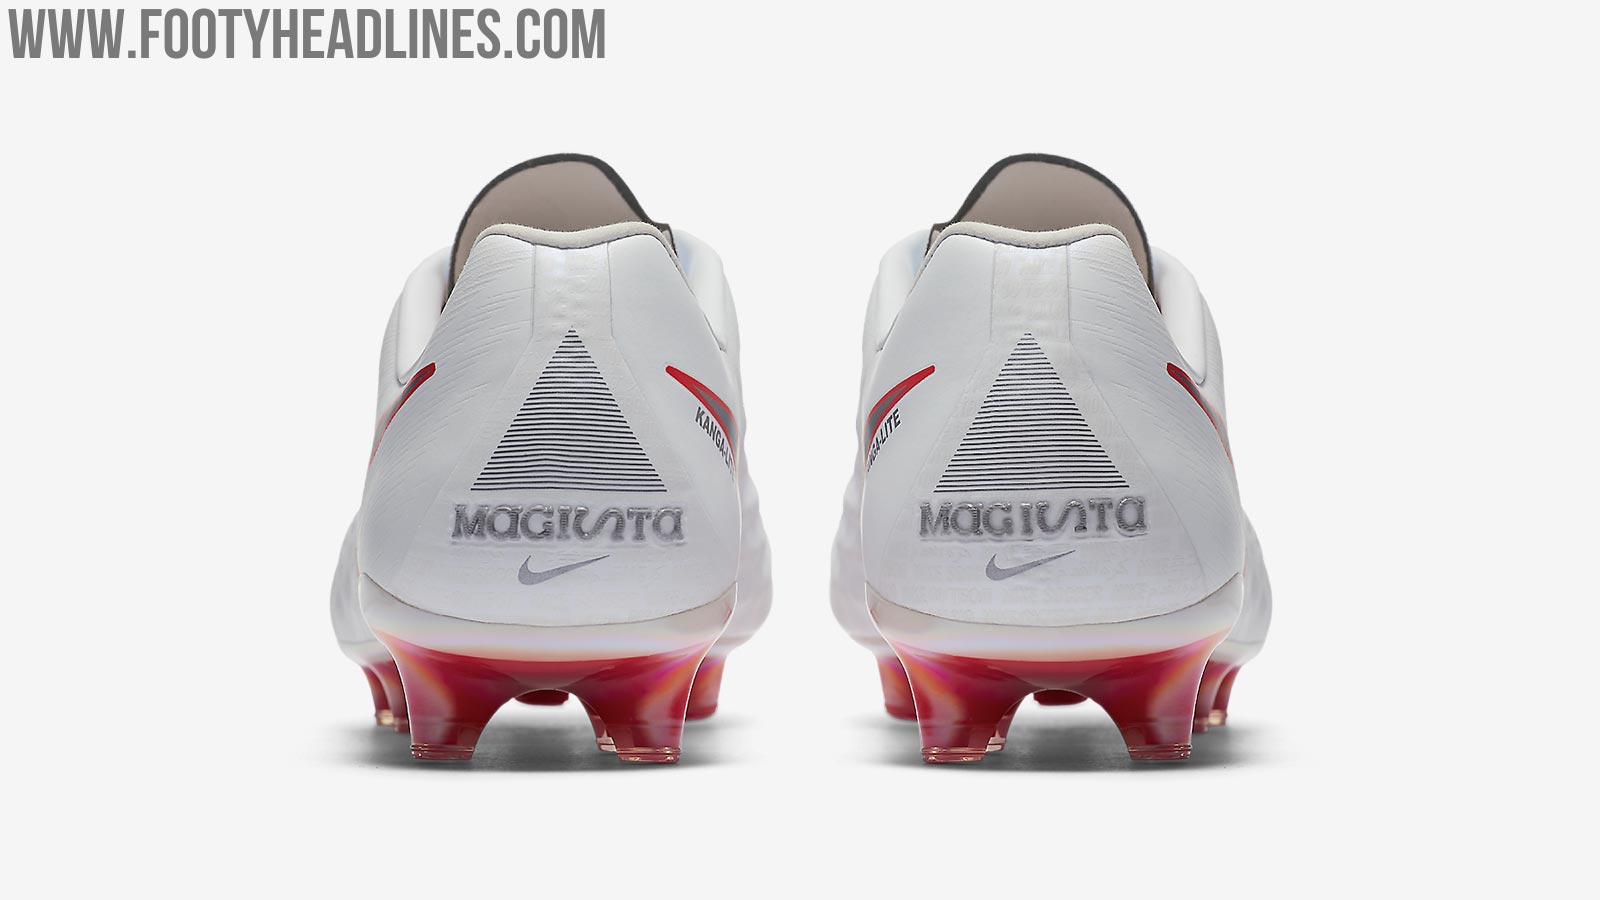 Chaussures Magista Nike Promo Sol Obra Mode Dur Football